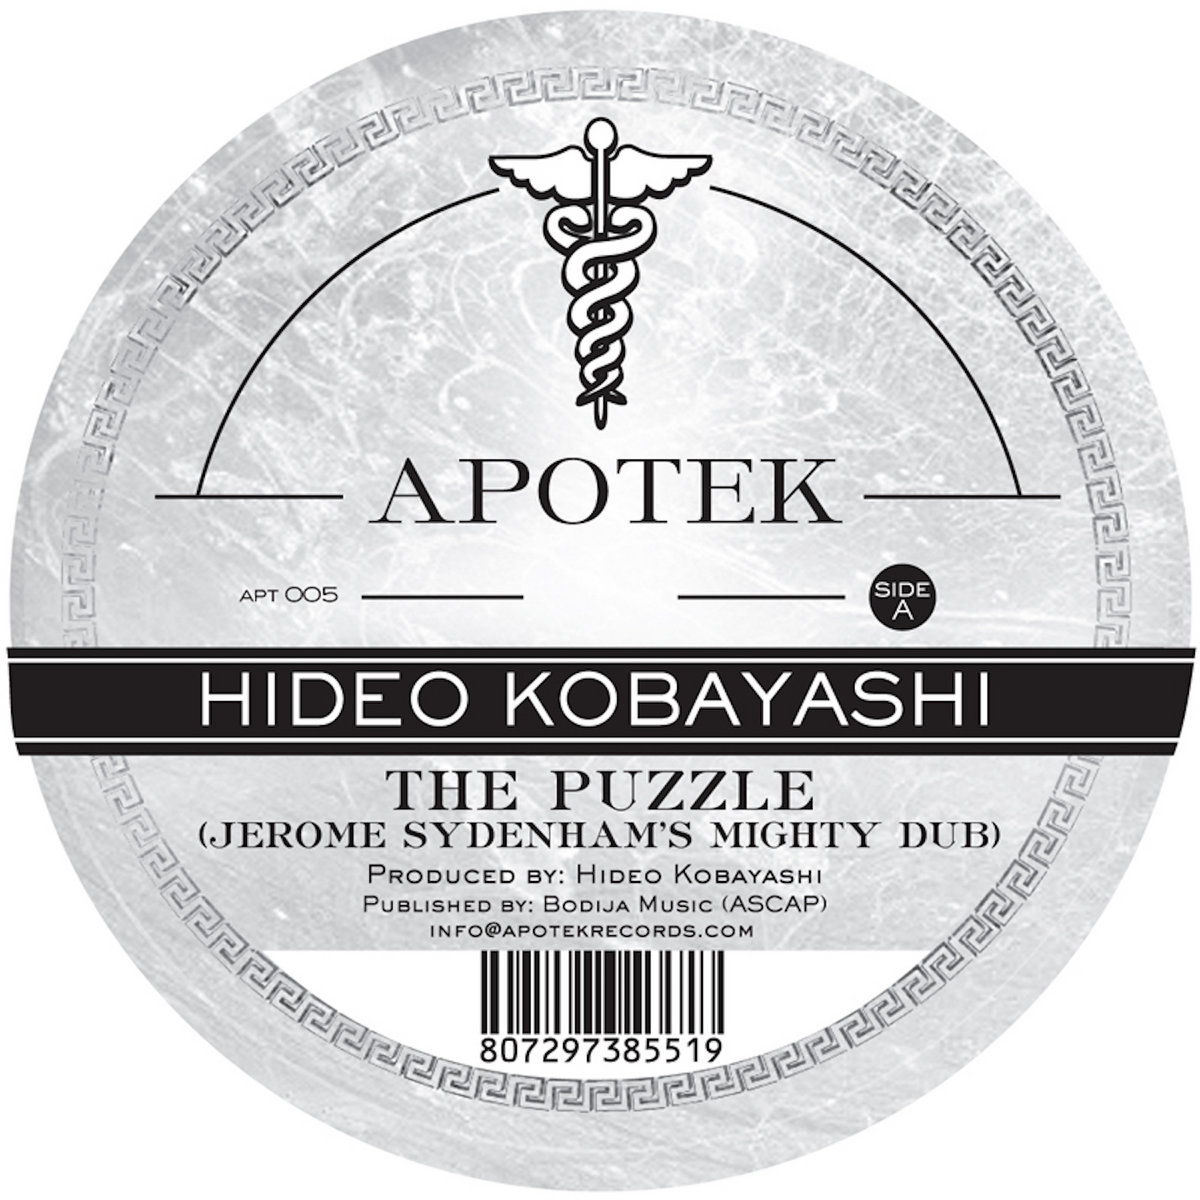 HIDEO KOBAYASHI - The Puzzle (Jerome Sydenham's Mighty Dub) / Congo : 12inch